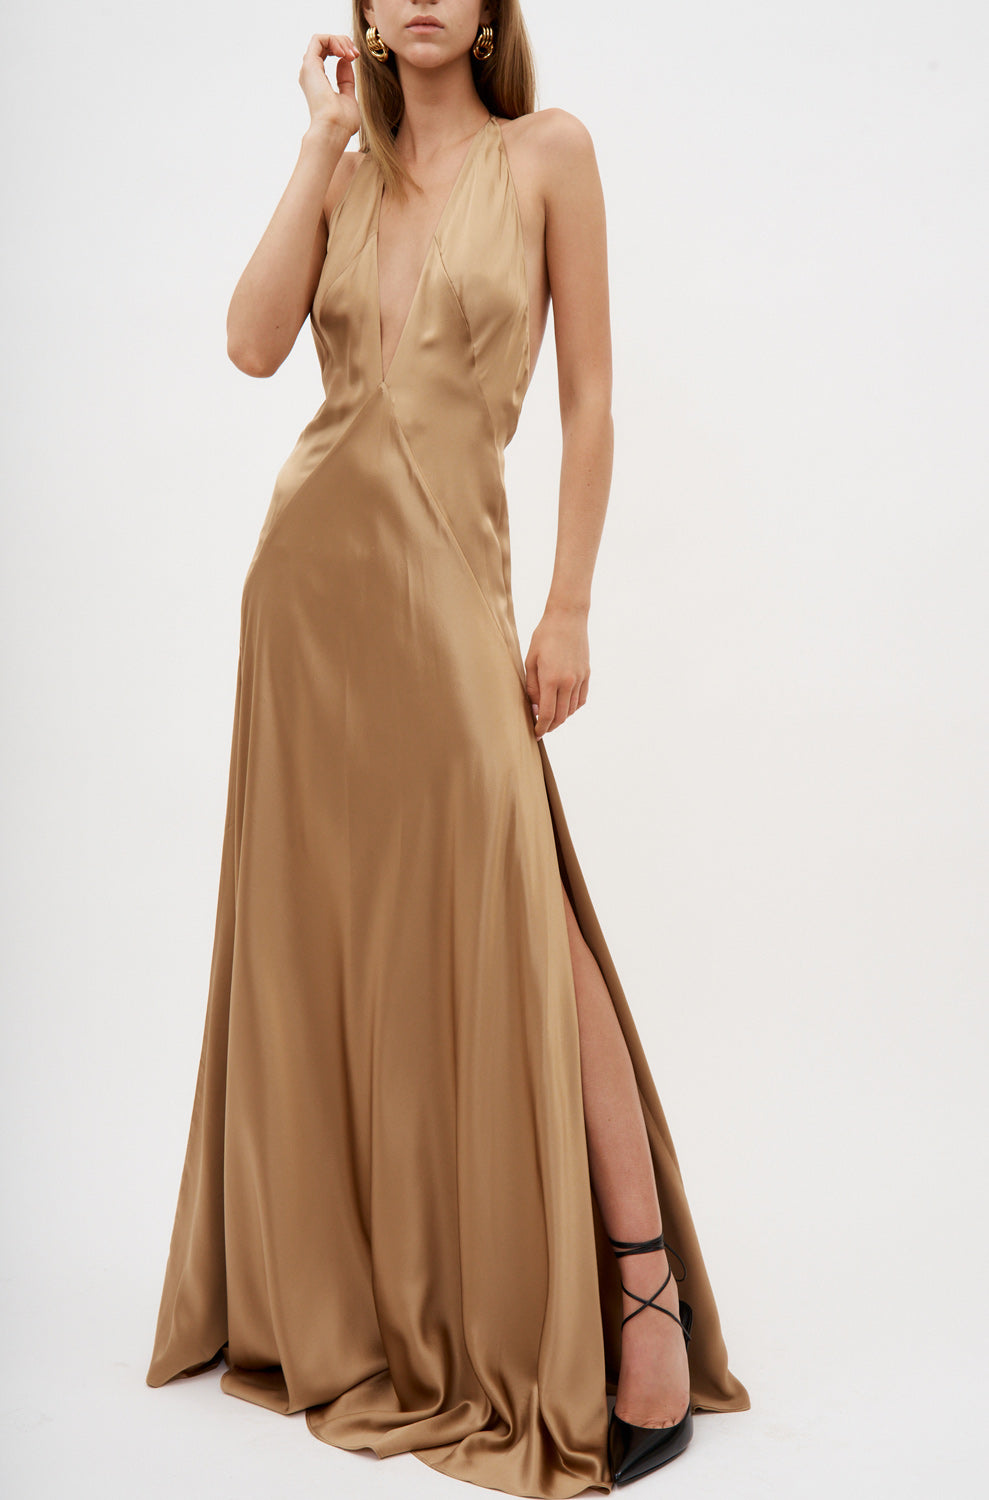 Alexandra Gold Maxi Dress